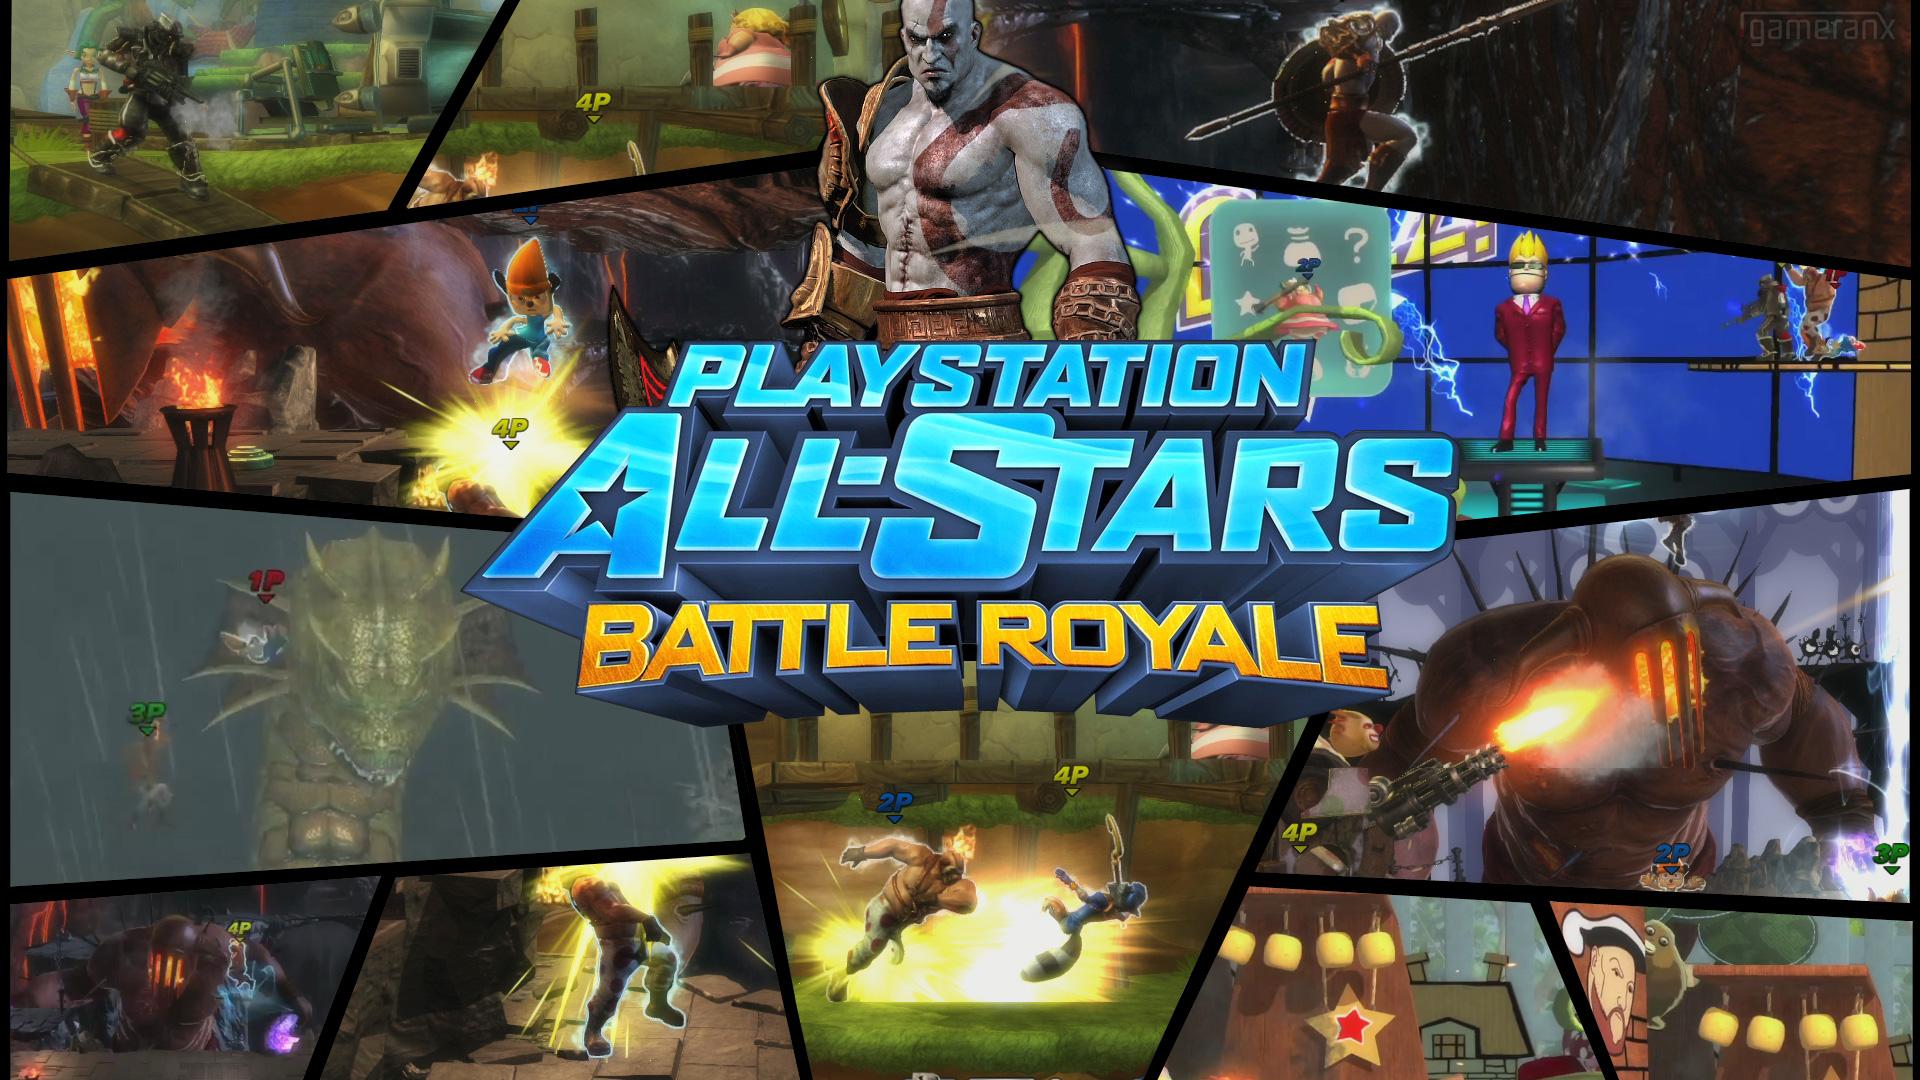 PlayStation-All-Stars-Battle-Royale-wallpaper-1080p